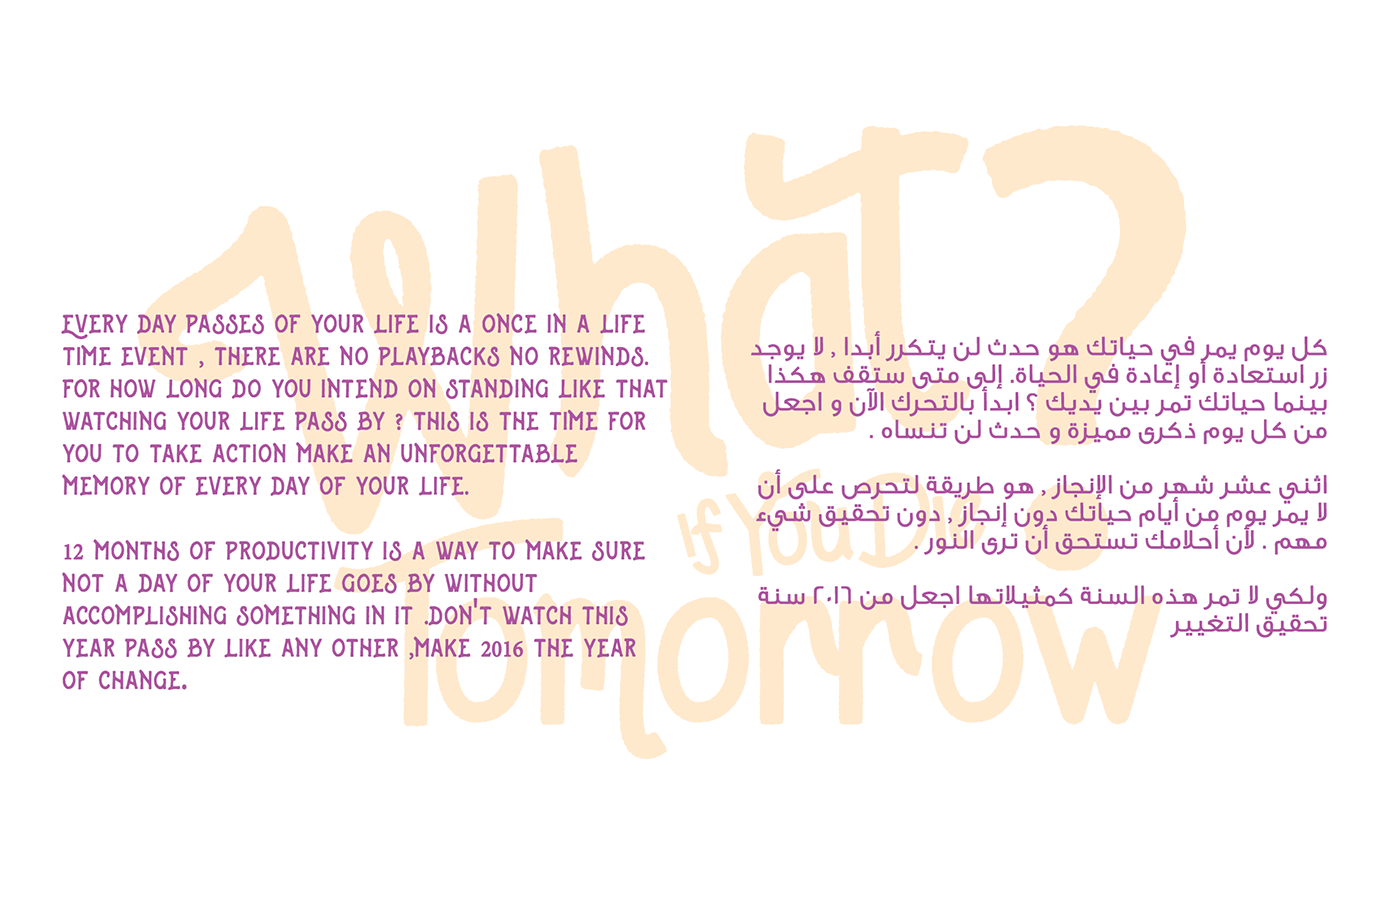 free download calendar freebie freebies arabic english creative 2016 Calendar